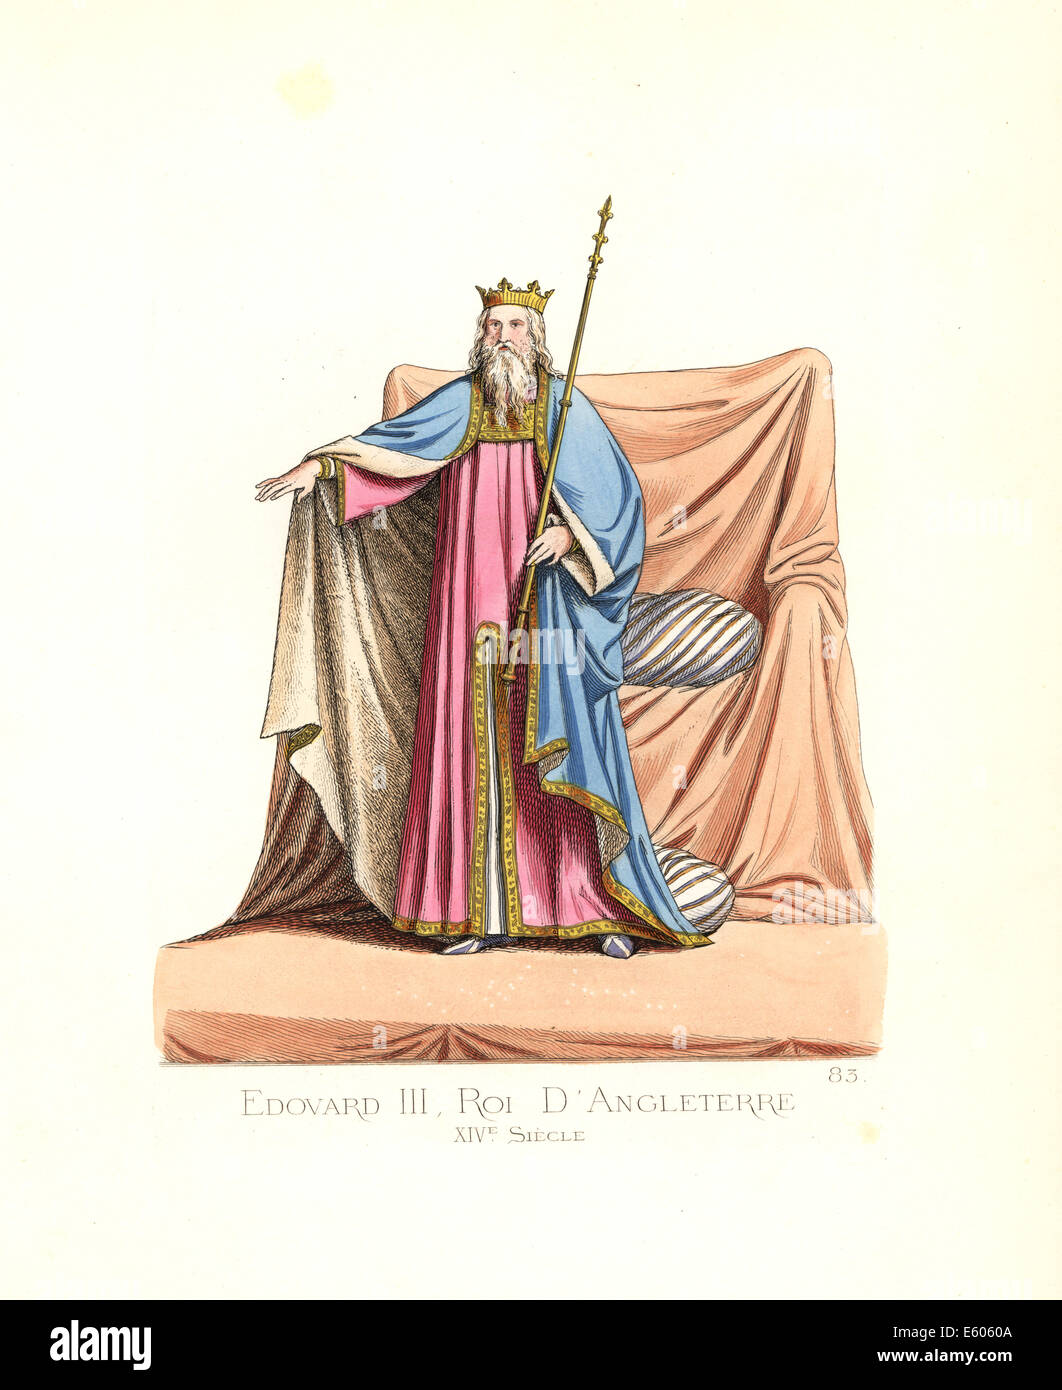 King Edward III of England, 14th century. Stock Photo